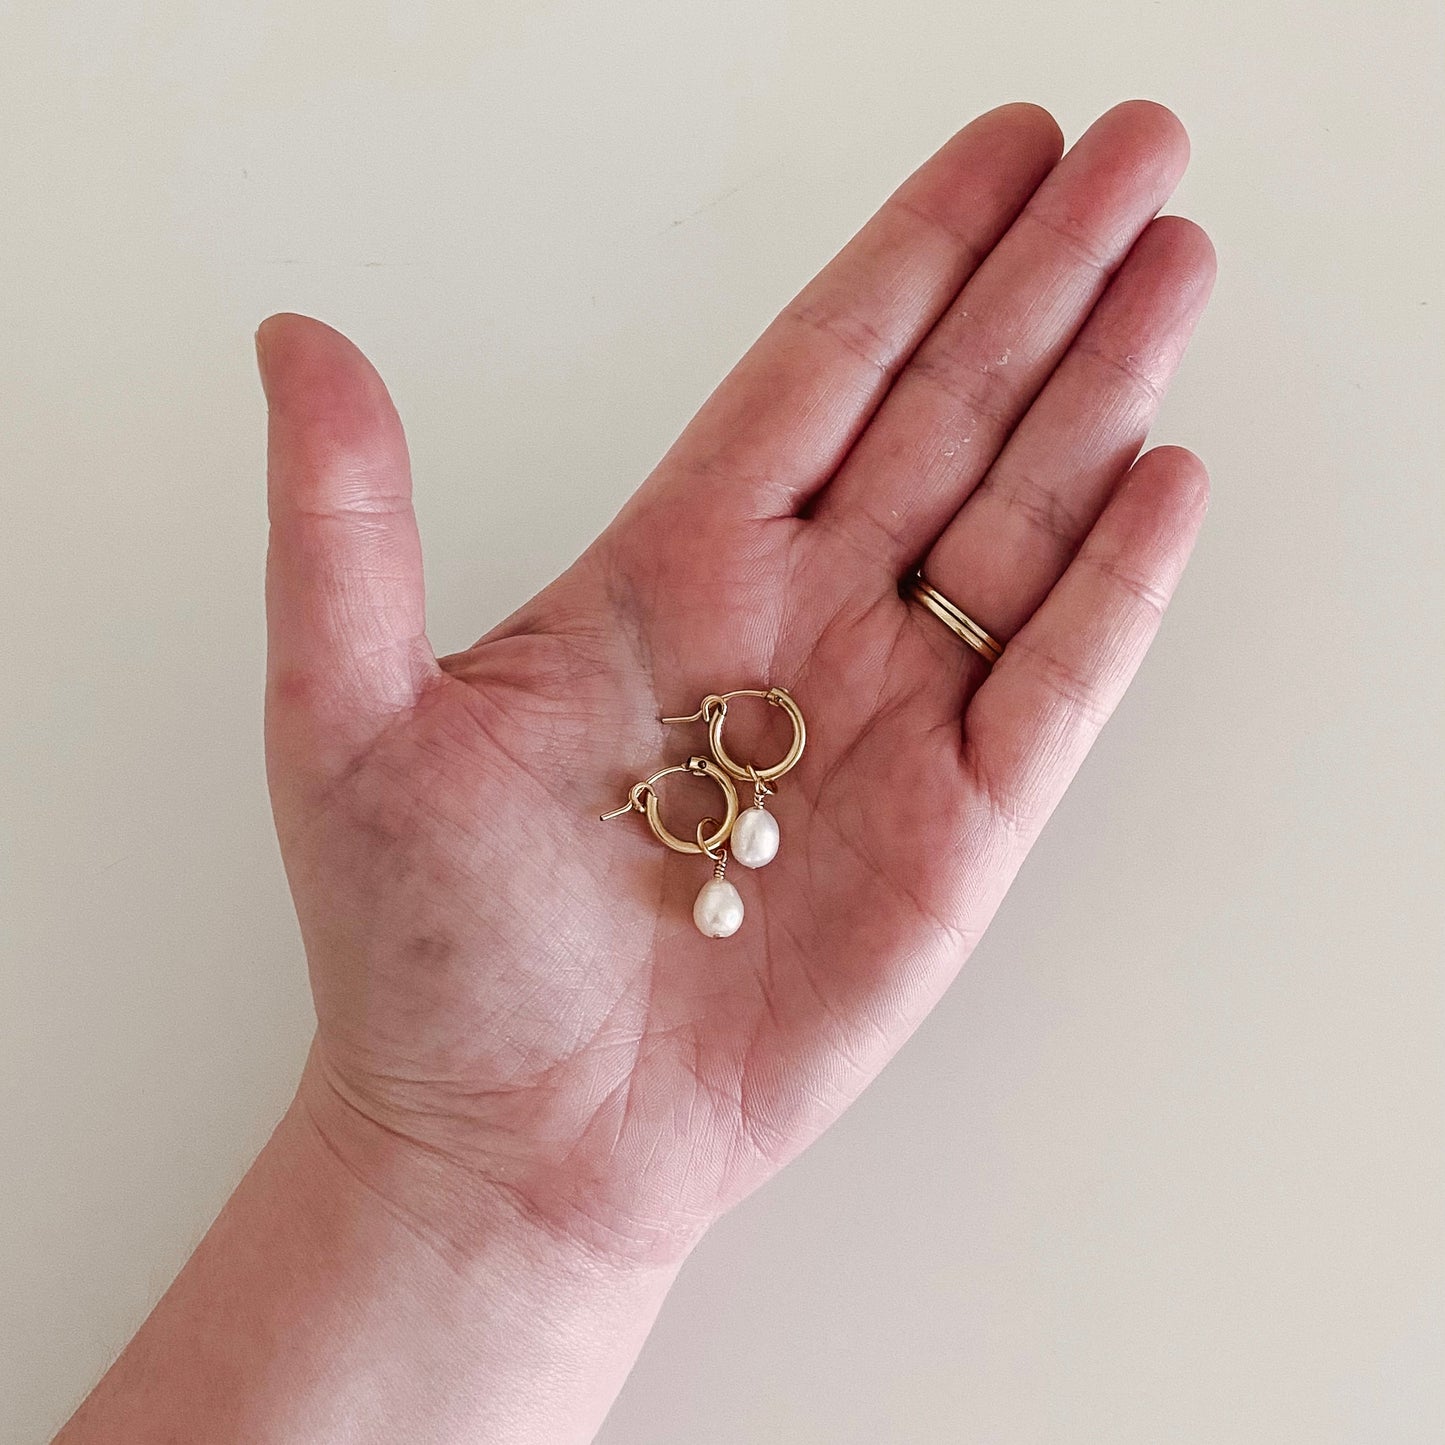 Elizabeth James — 2 in 1 earrings